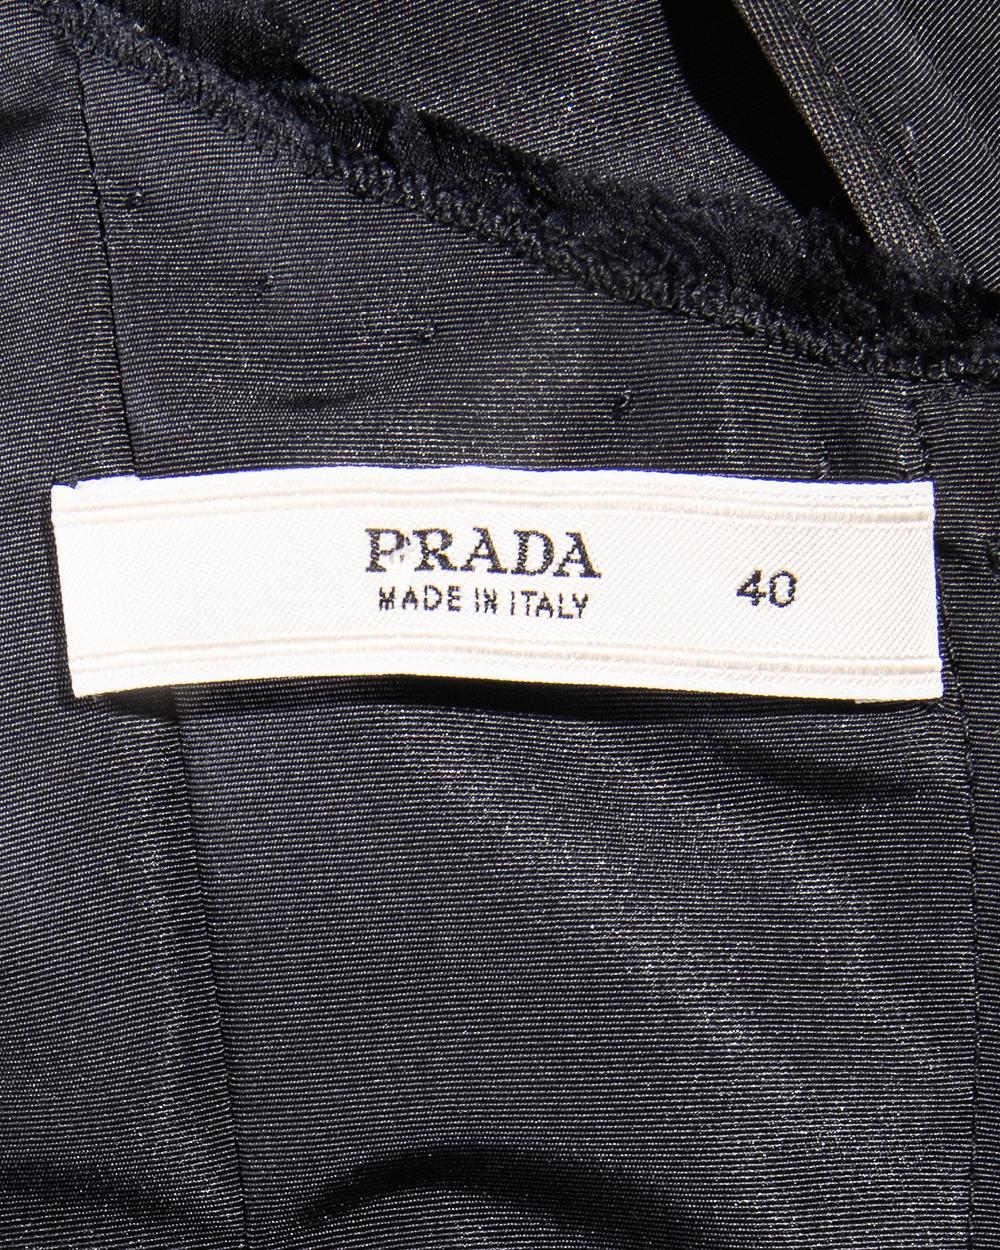 c. 2003 Prada by Miuccia Prada Corset Top with Ruffle Bust 3